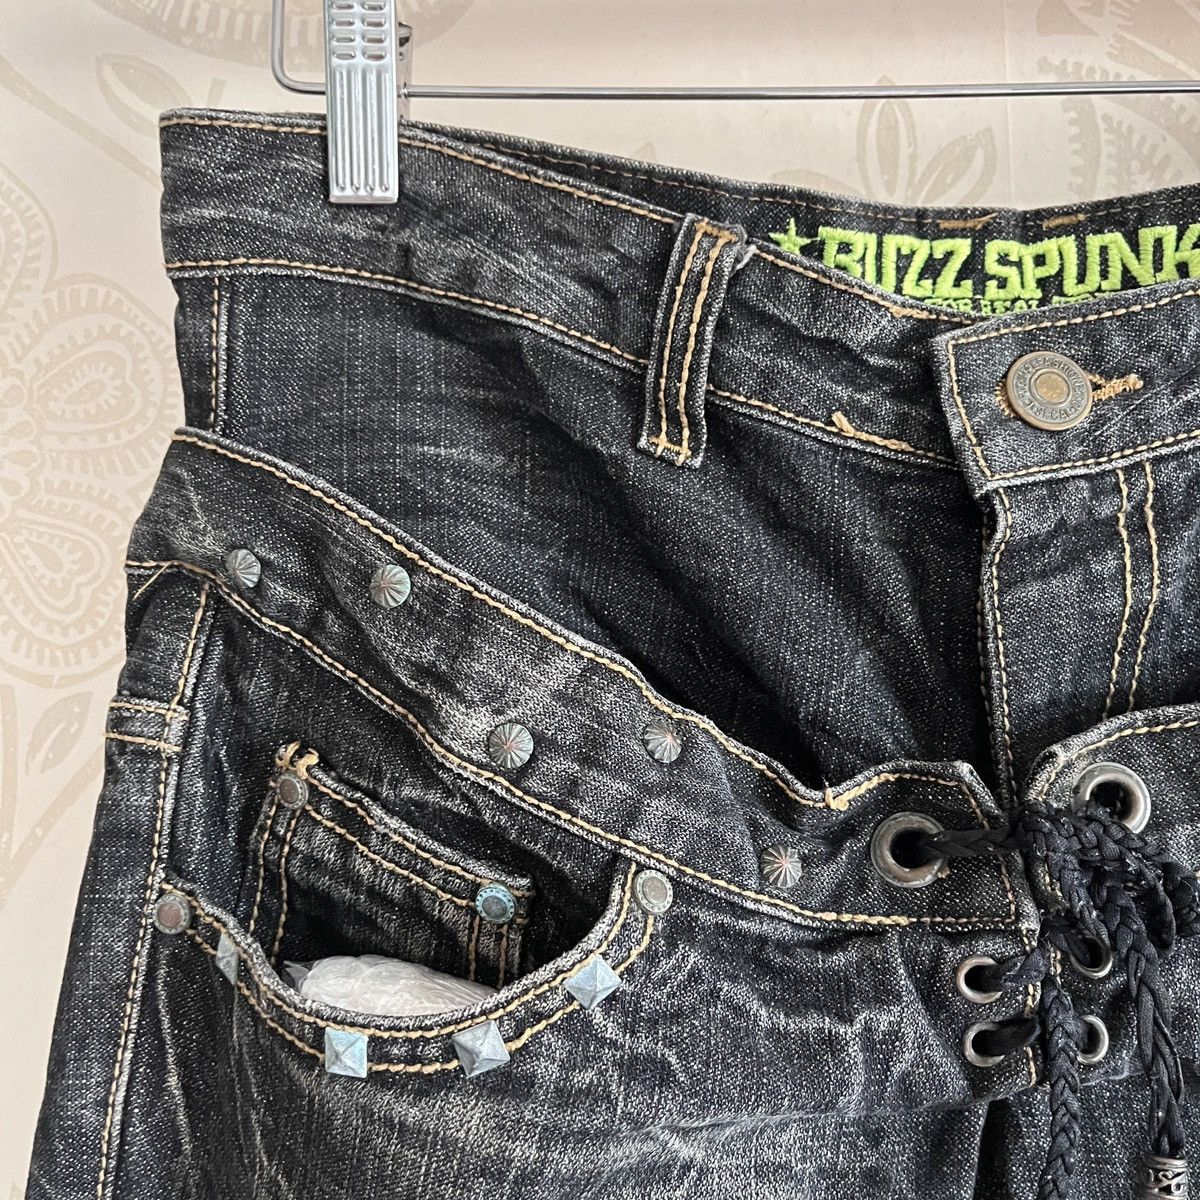 Buzz Rickson's - Rare Distressed Undercover Double Waist Buzz Spunky Jeans - 4